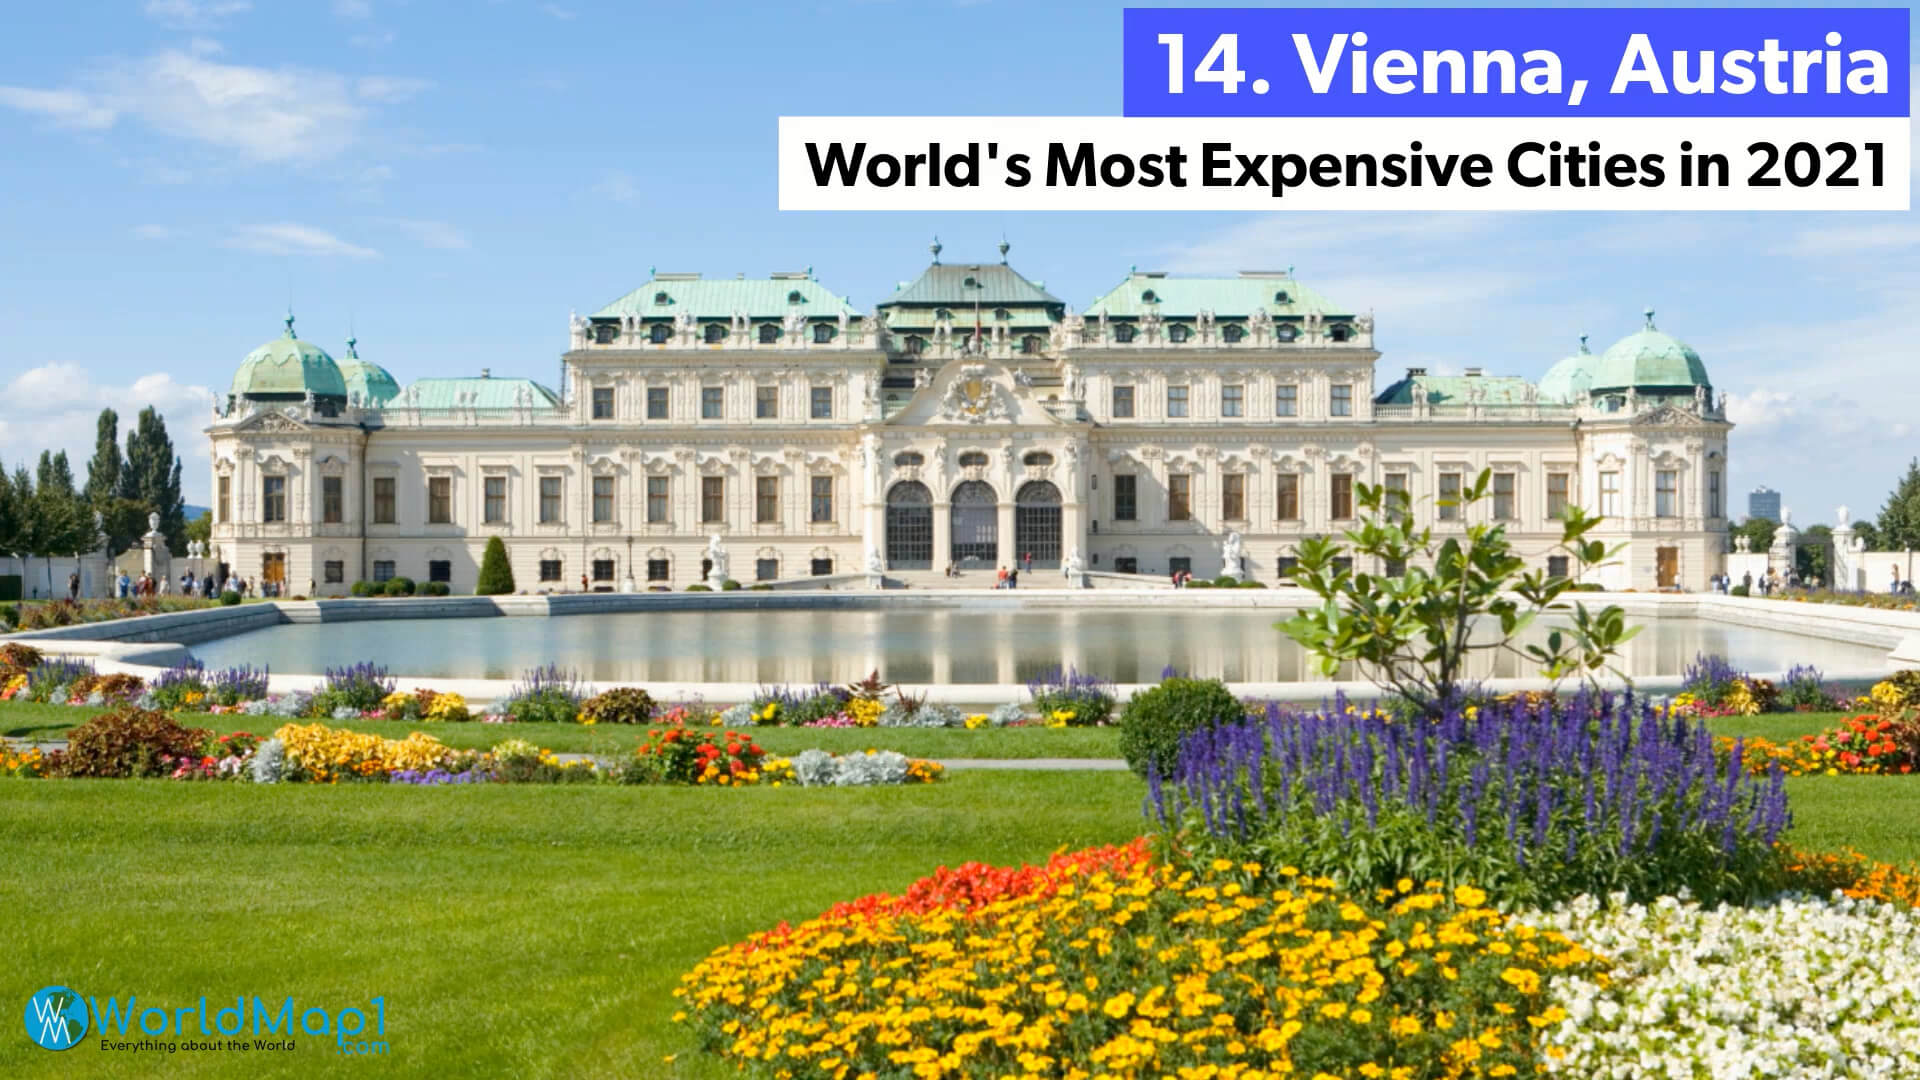 World's Most Expensive Cities - Vienna, Austria